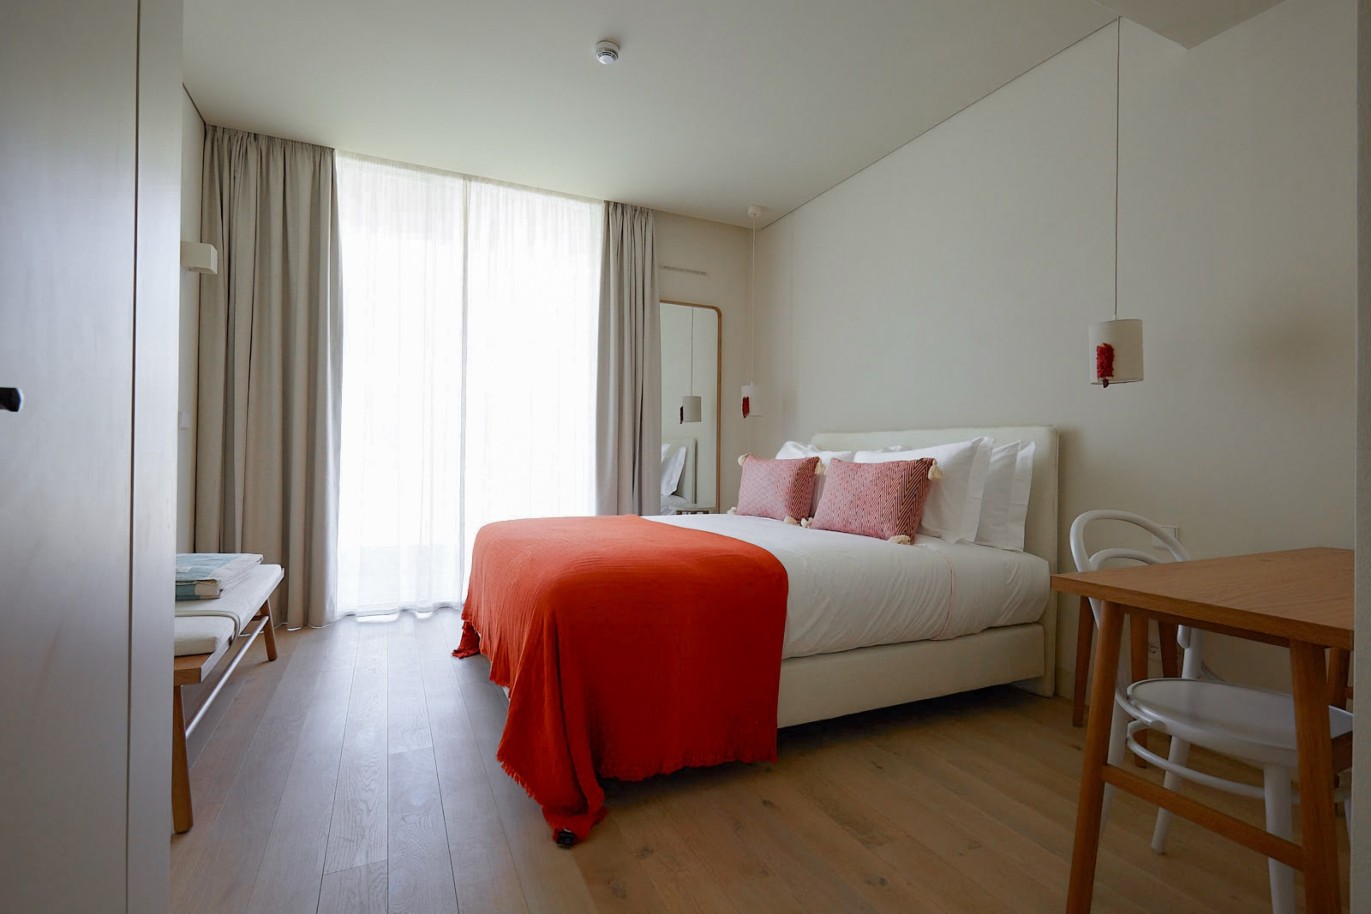 2 bedroom apartment in resort, for sale in Porches, Algarve_230634